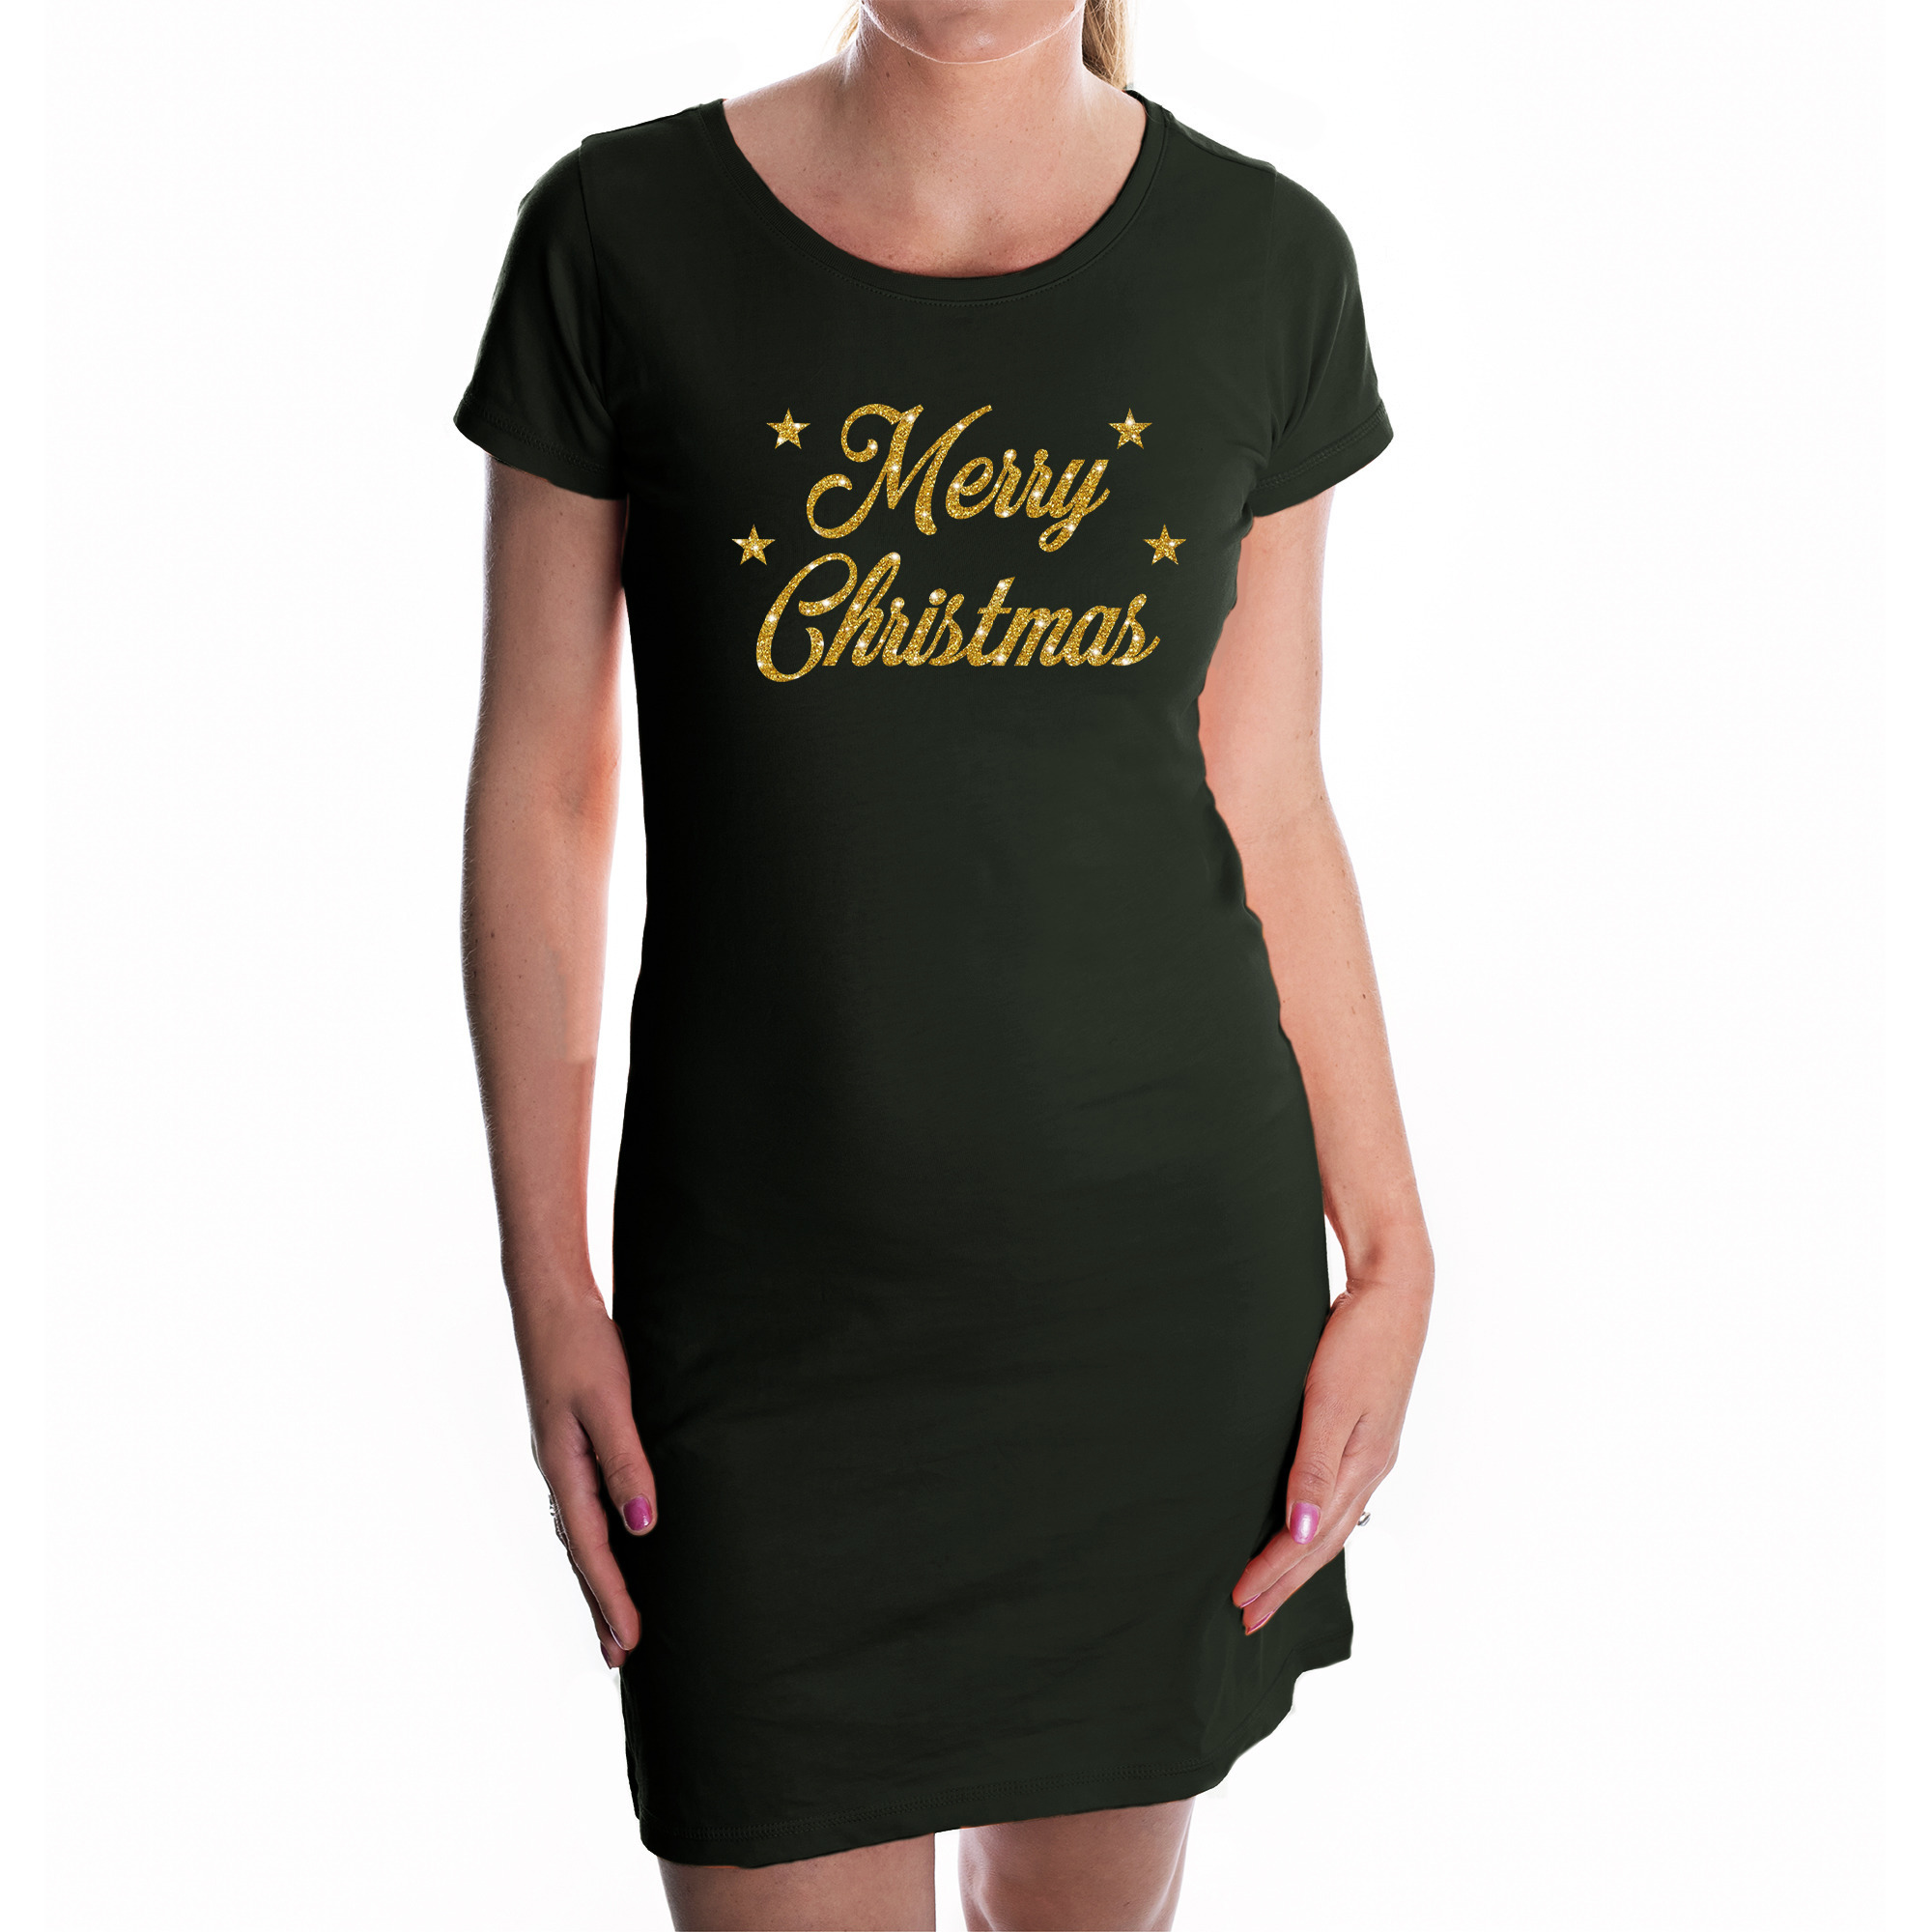 emmer boeket trechter Fout kerst jurkje Merry Christmas glitter goud op zwart voor dames - Kerst  kleding / outfit - Primodo warenhuis